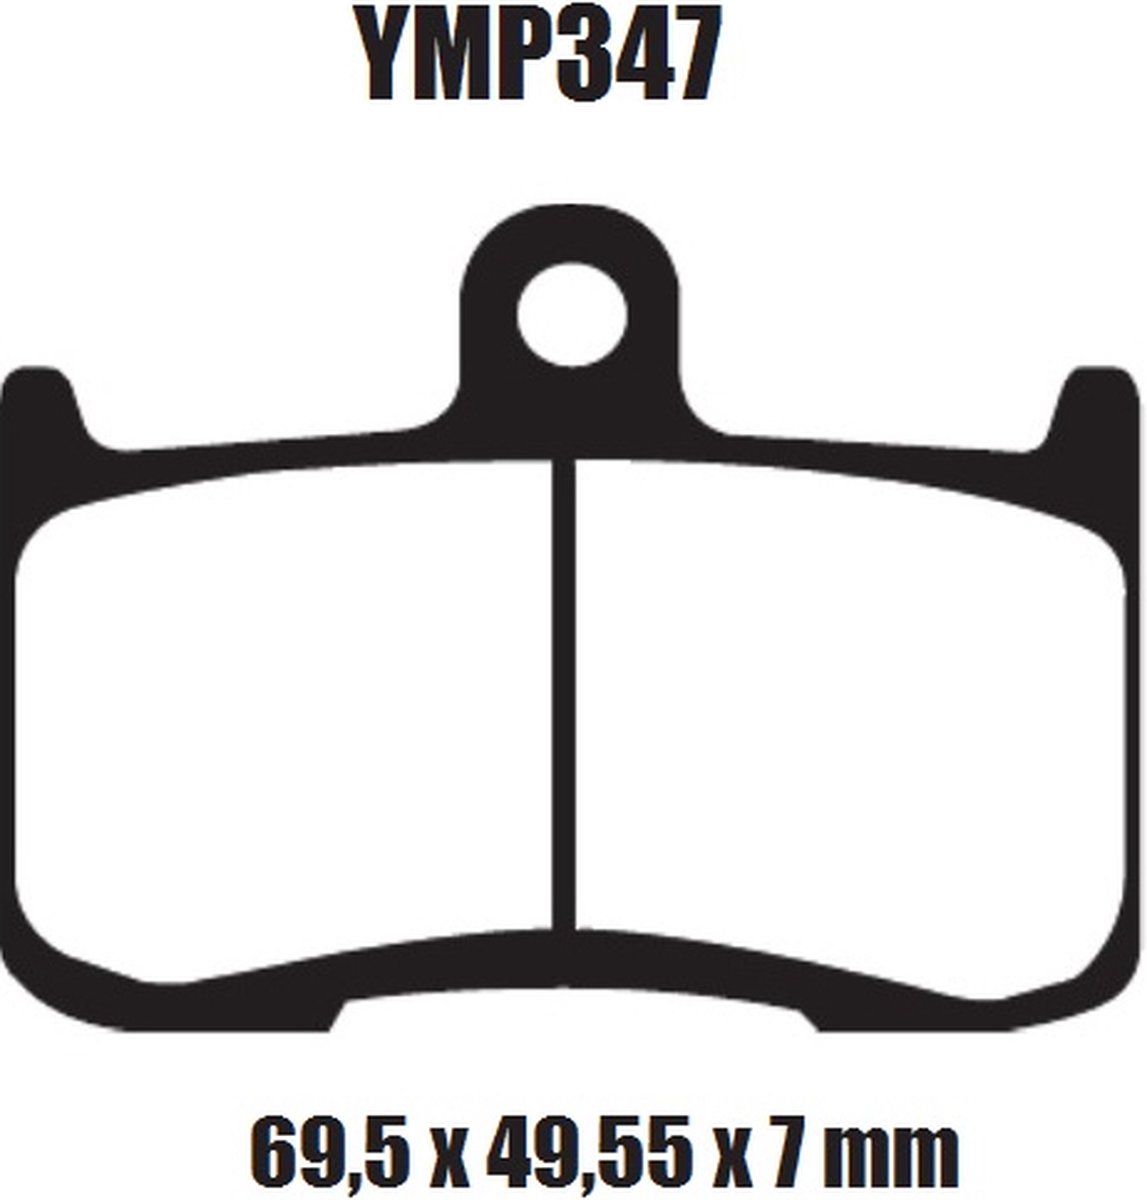 Motor remblokken voorzijde Triumph Tiger SE 2010 - 2013 YMP347 remblok rem voor